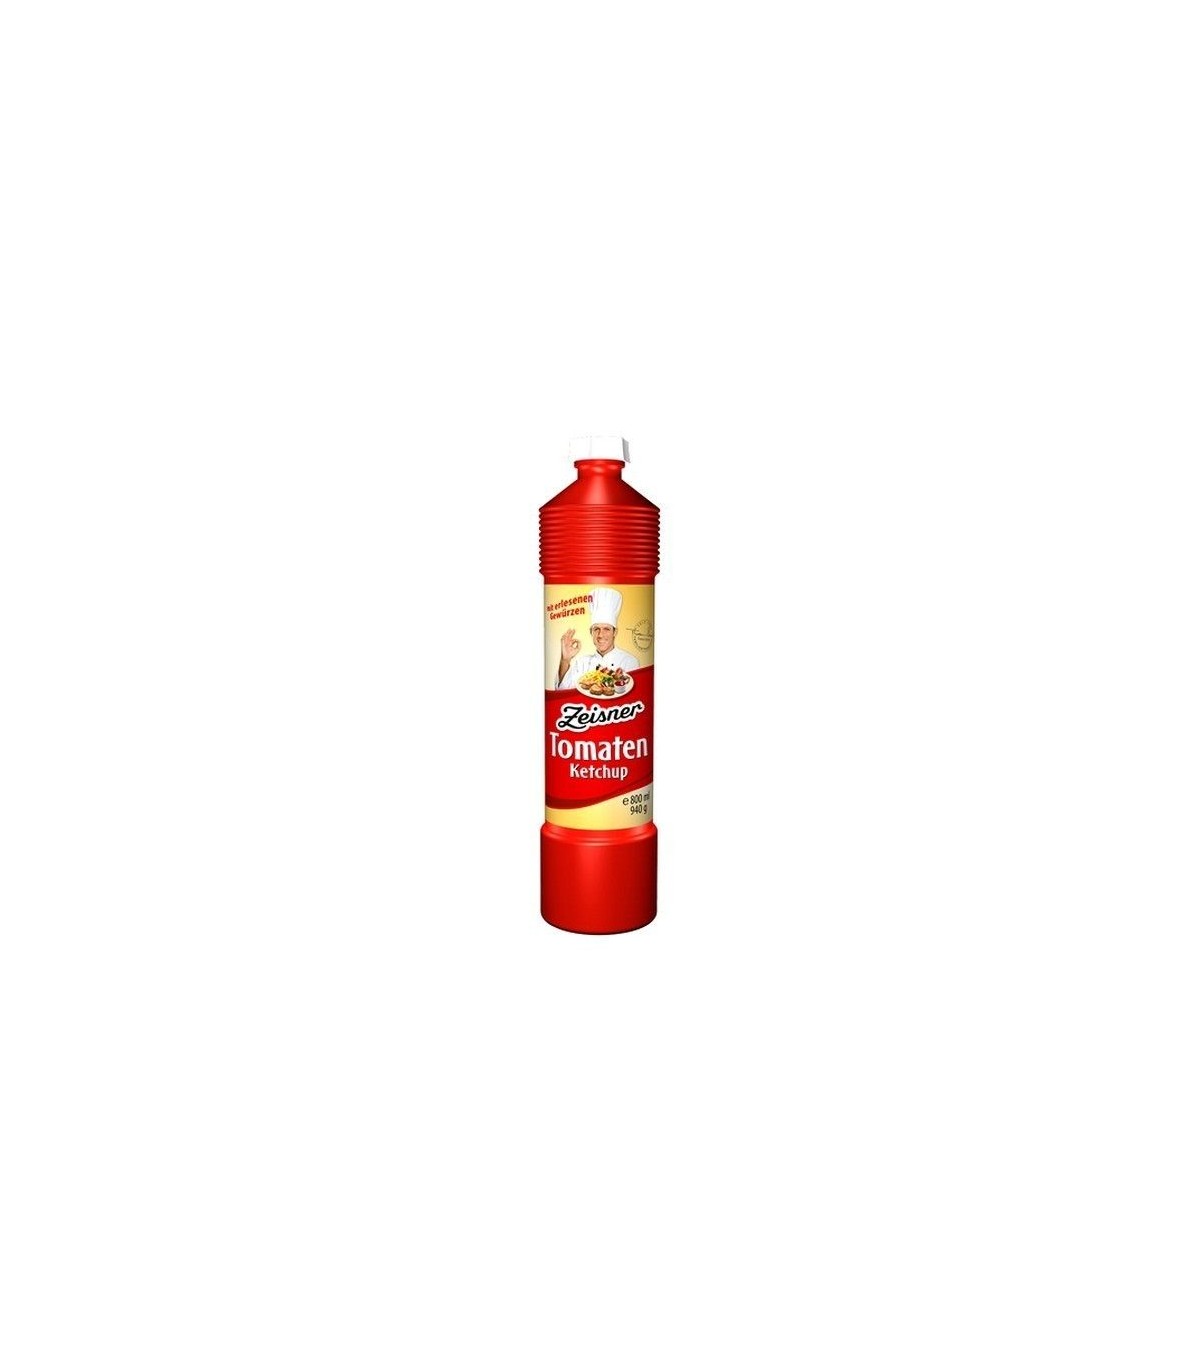 Heinz Hot Chili ketchup Top Down 400ml - CHOCKIES BELGE